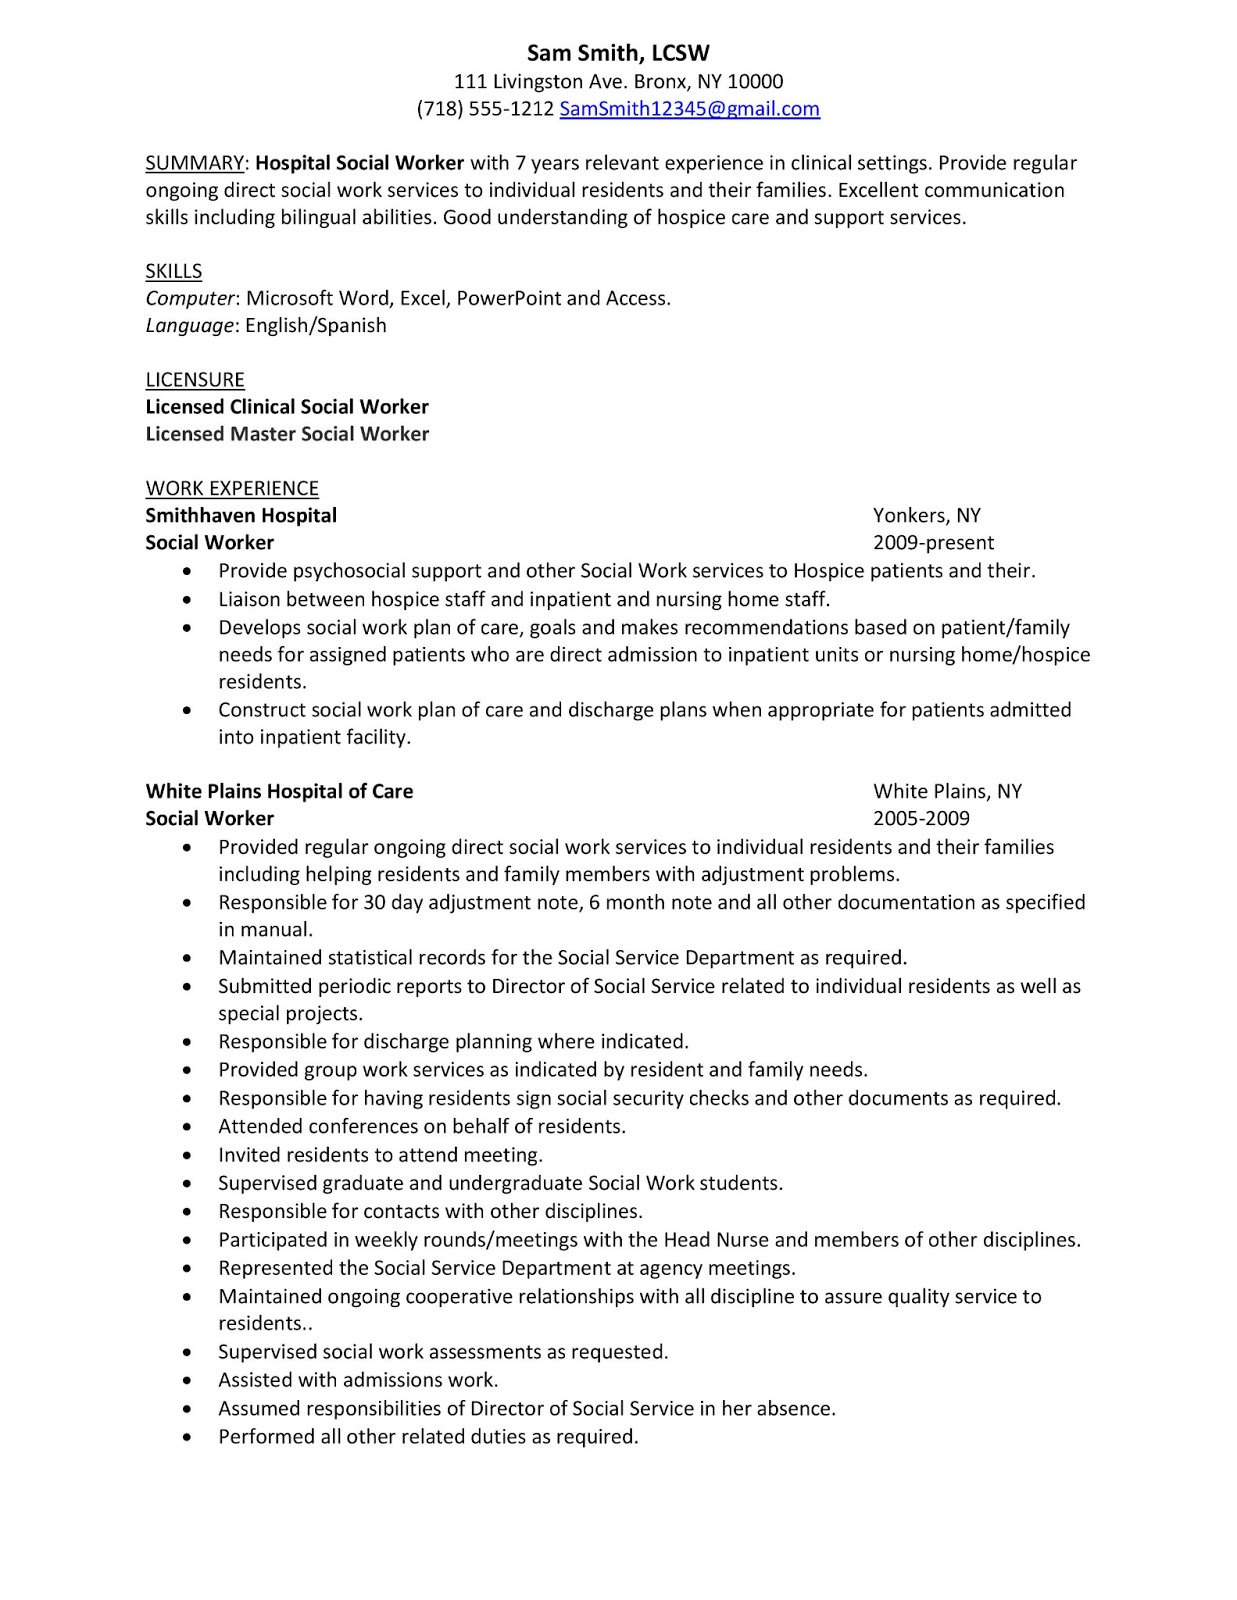 Sample resume for registrar at hospital